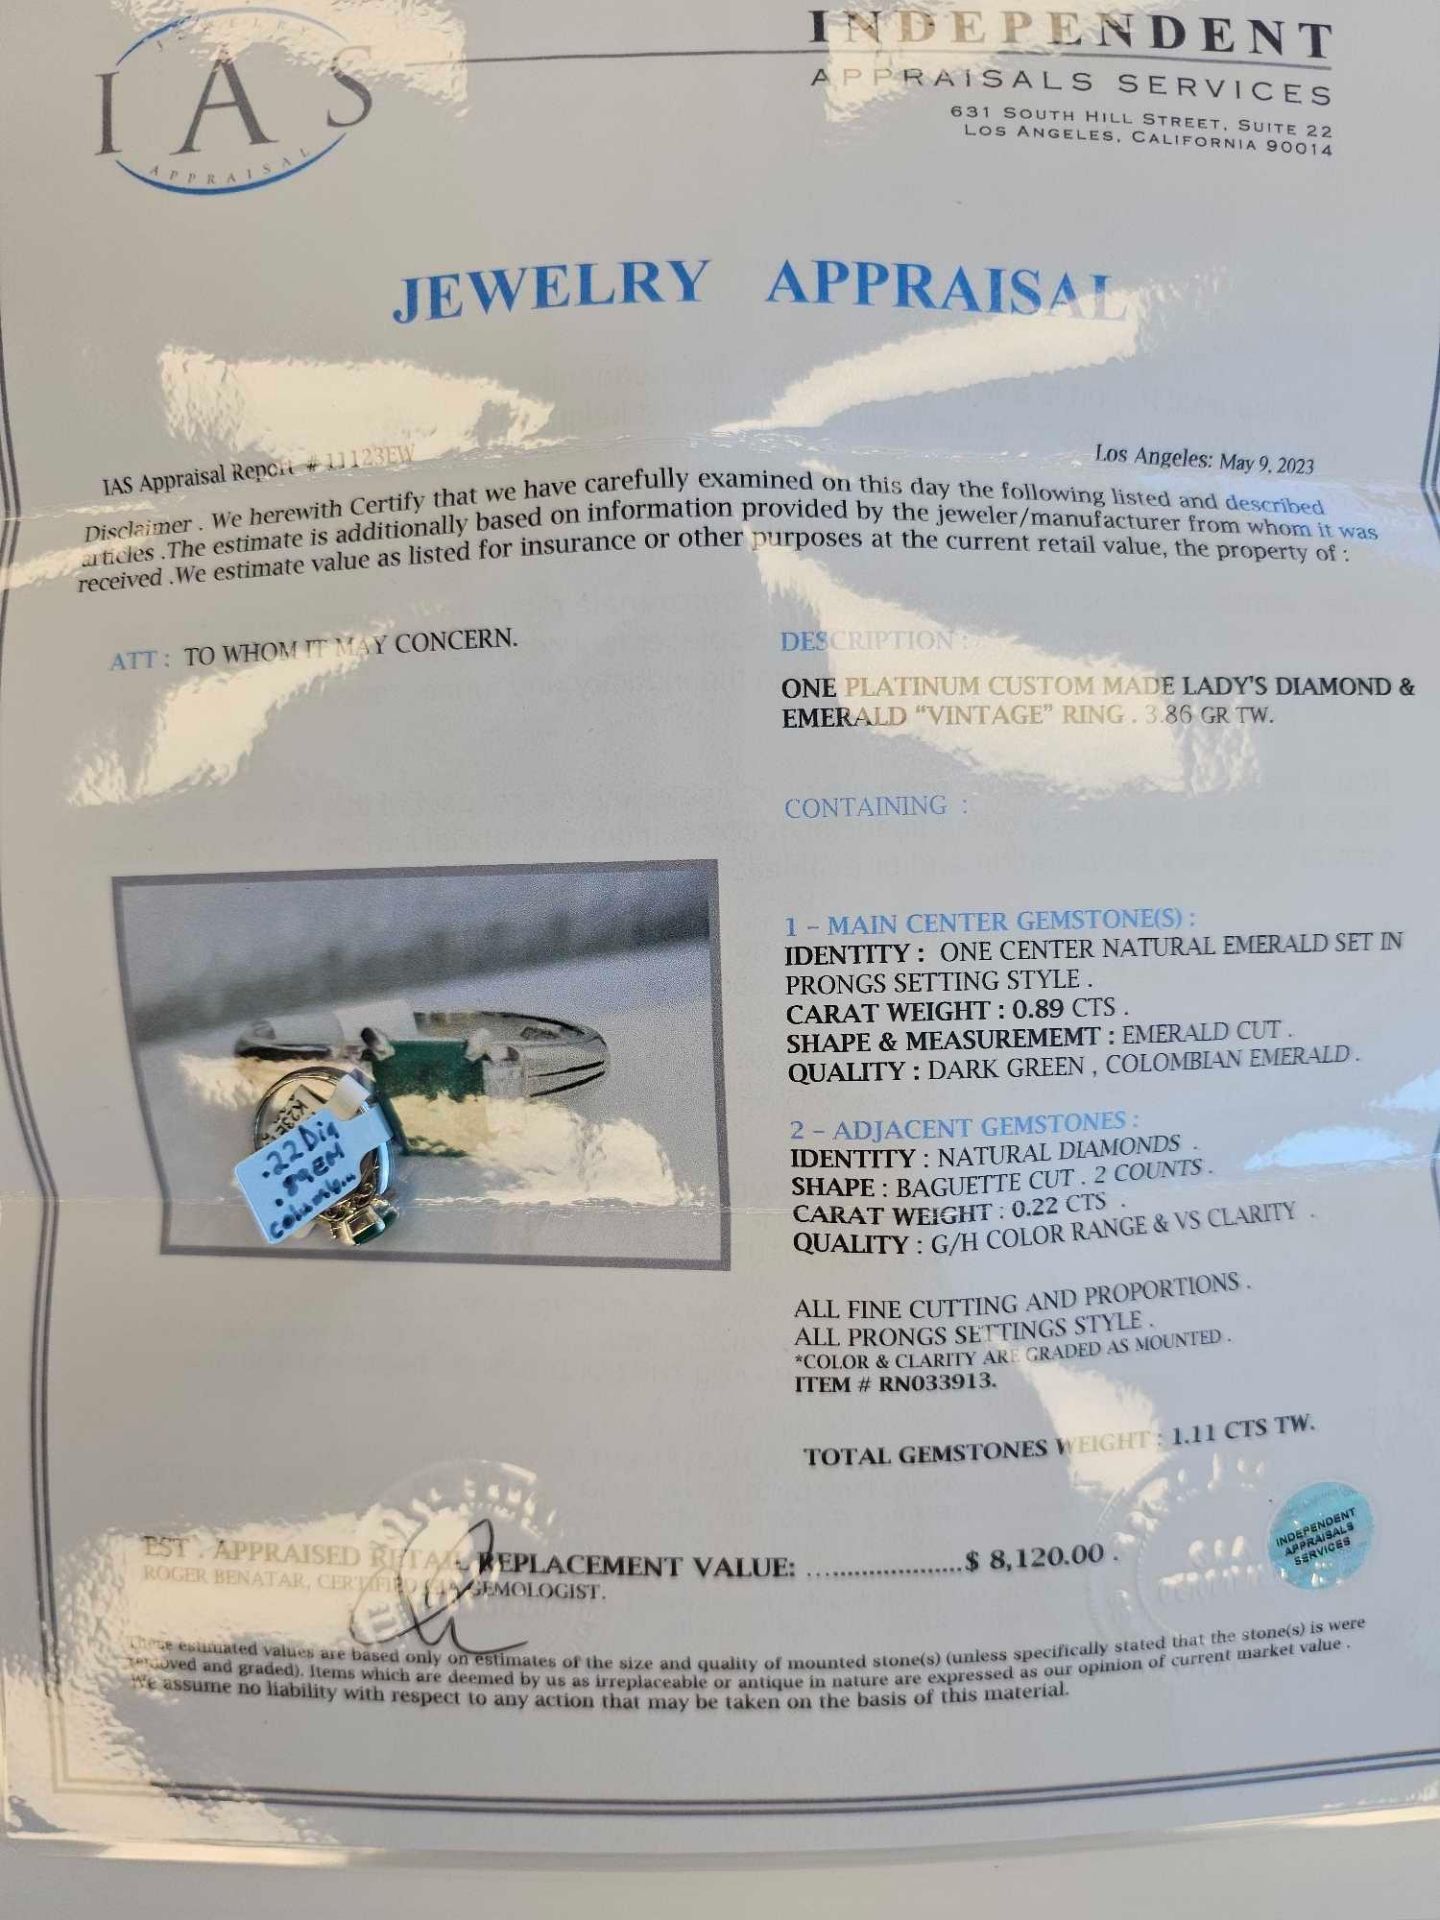 Jewelry: Platinum Custom Made Lady's Diamond & Emerald Vintage Ring 3.86 gr tw - Image 3 of 8